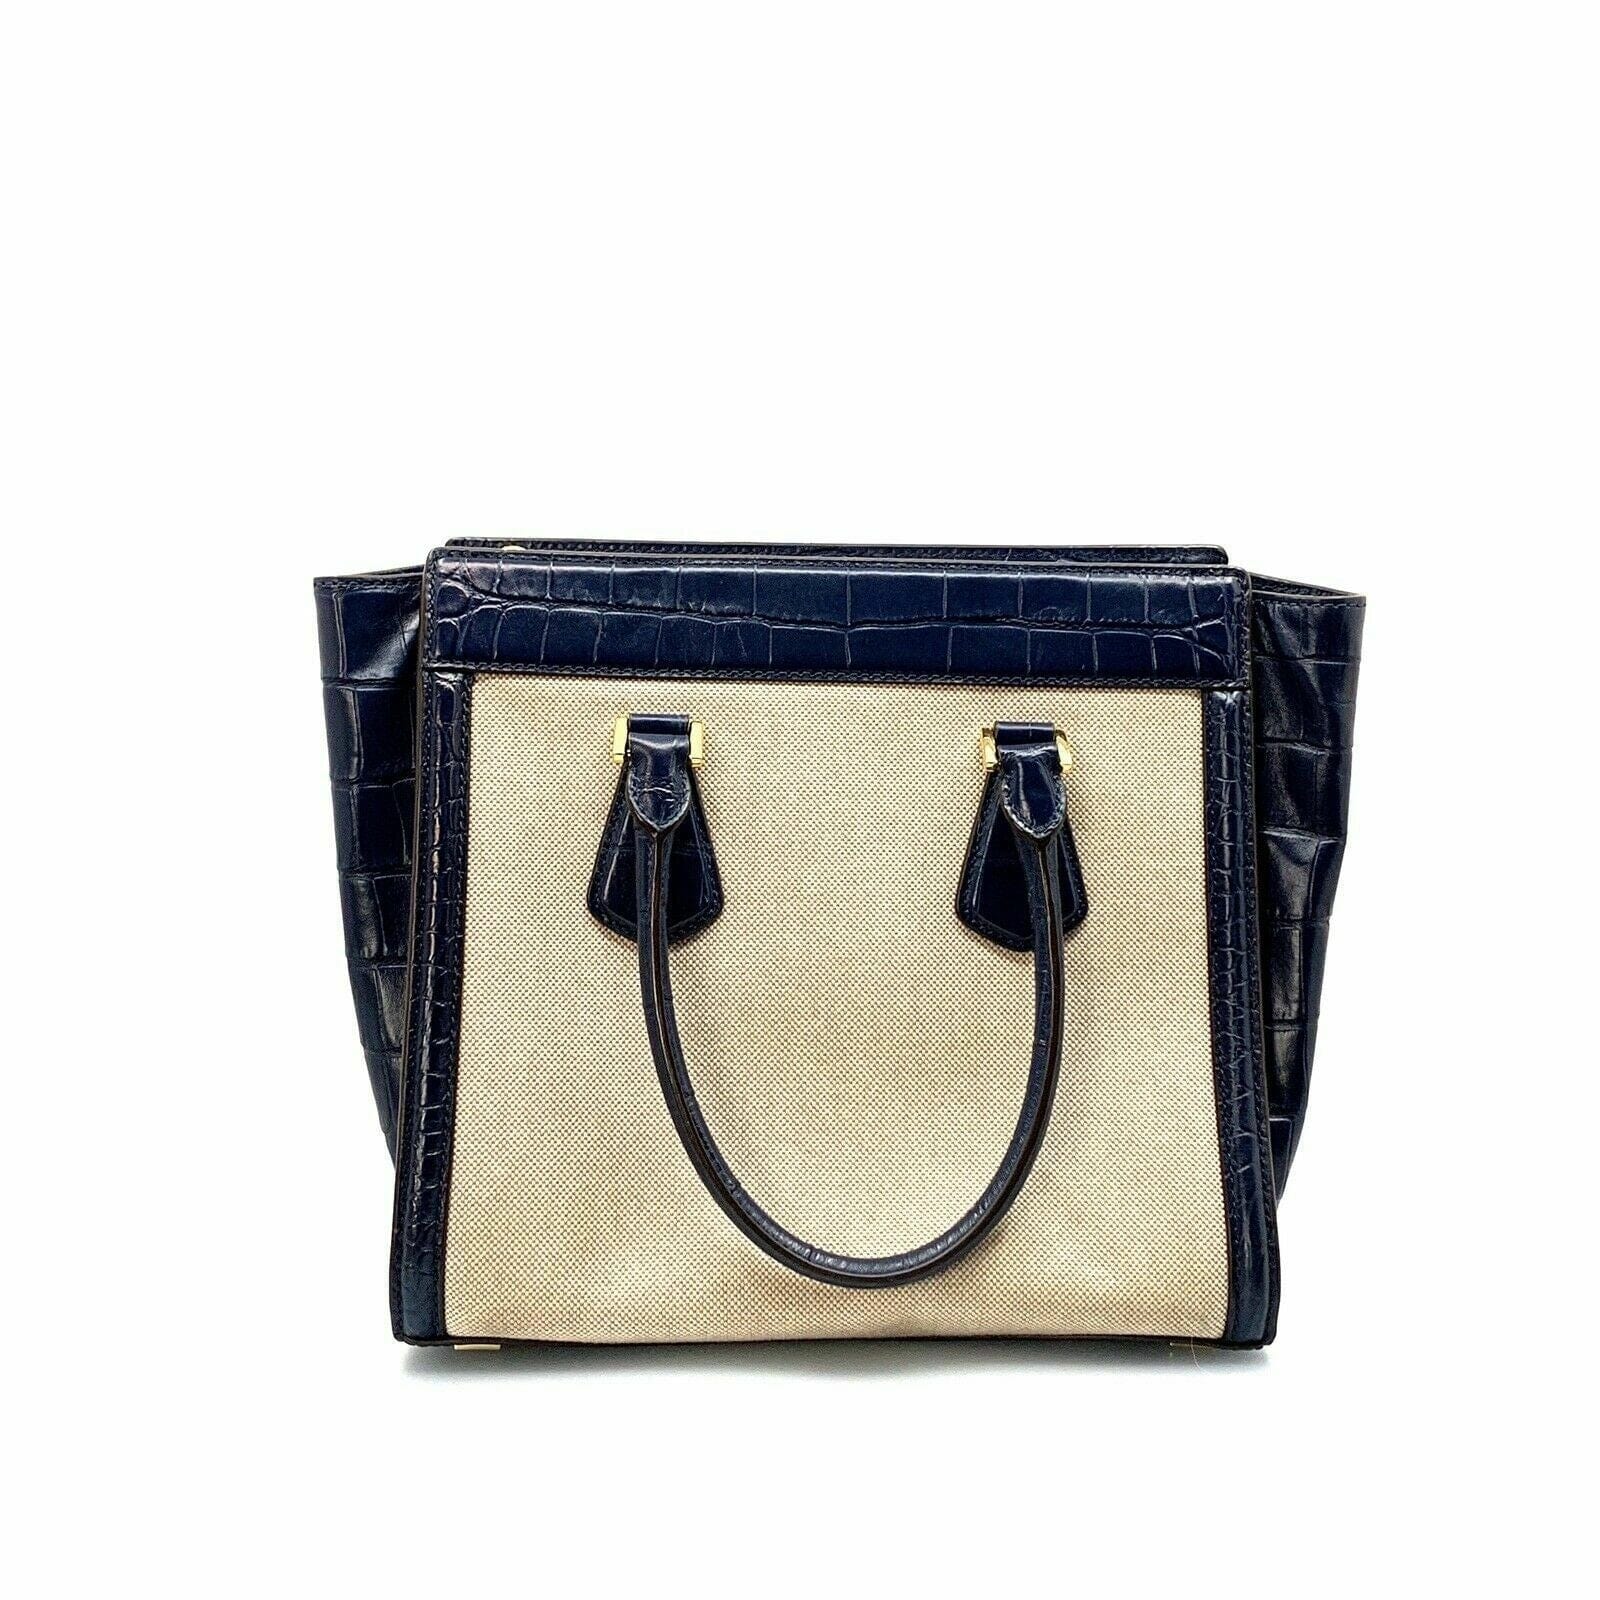 The Sak Navy Blue Rough Edge 100% Leather Foldover Crossbody Purse Handbag  Bag | eBay